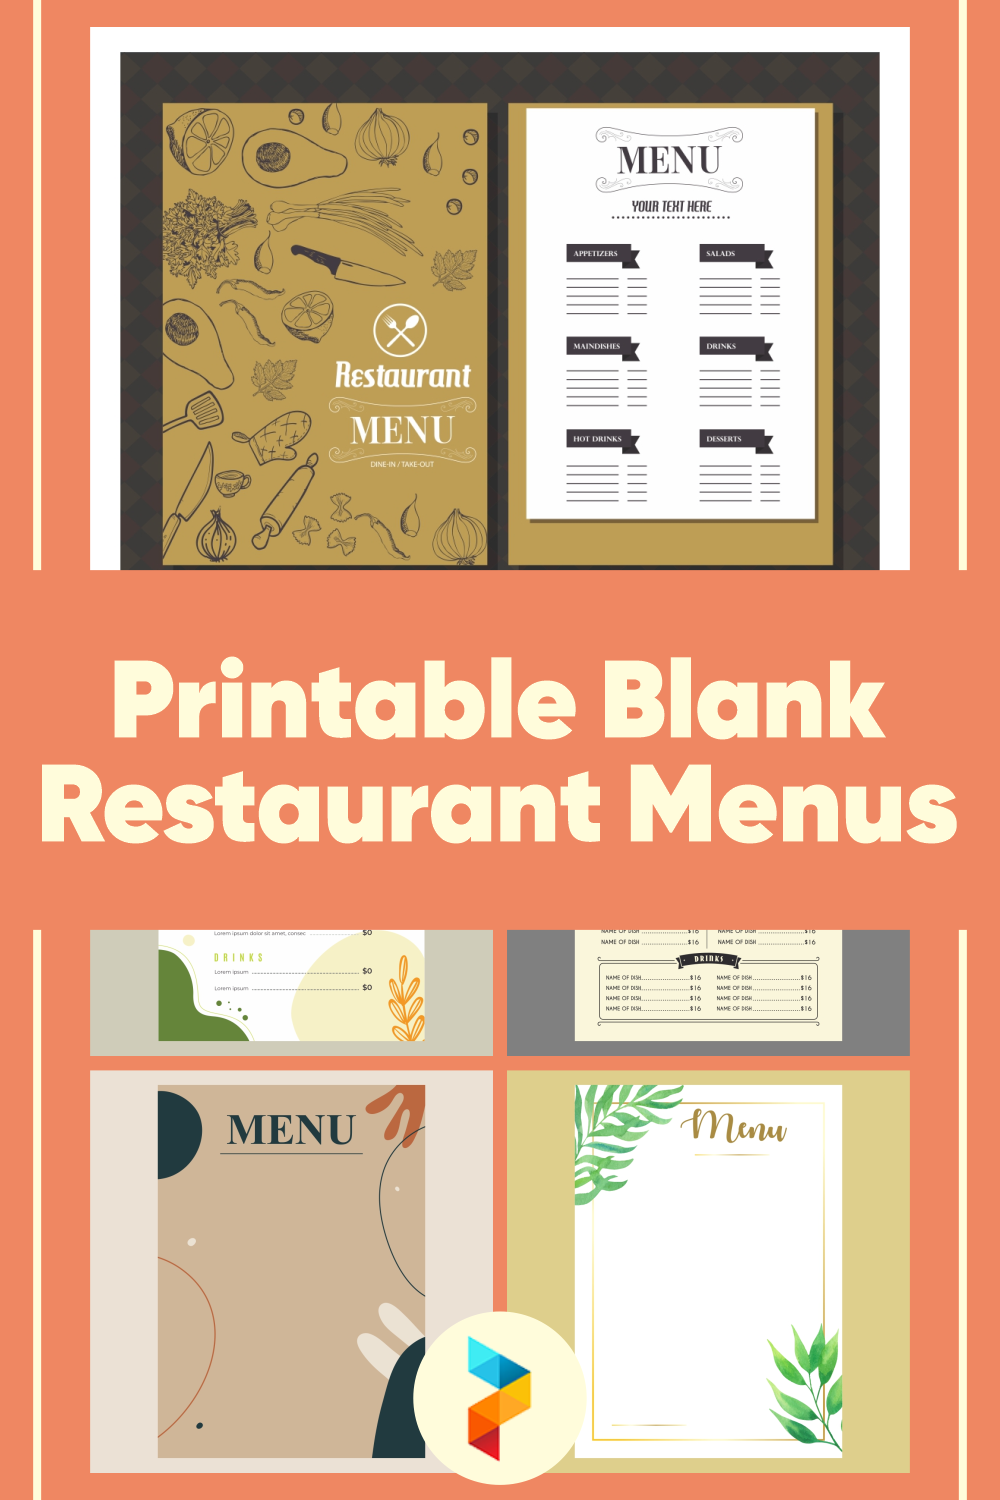 Printable Blank Restaurant Menus